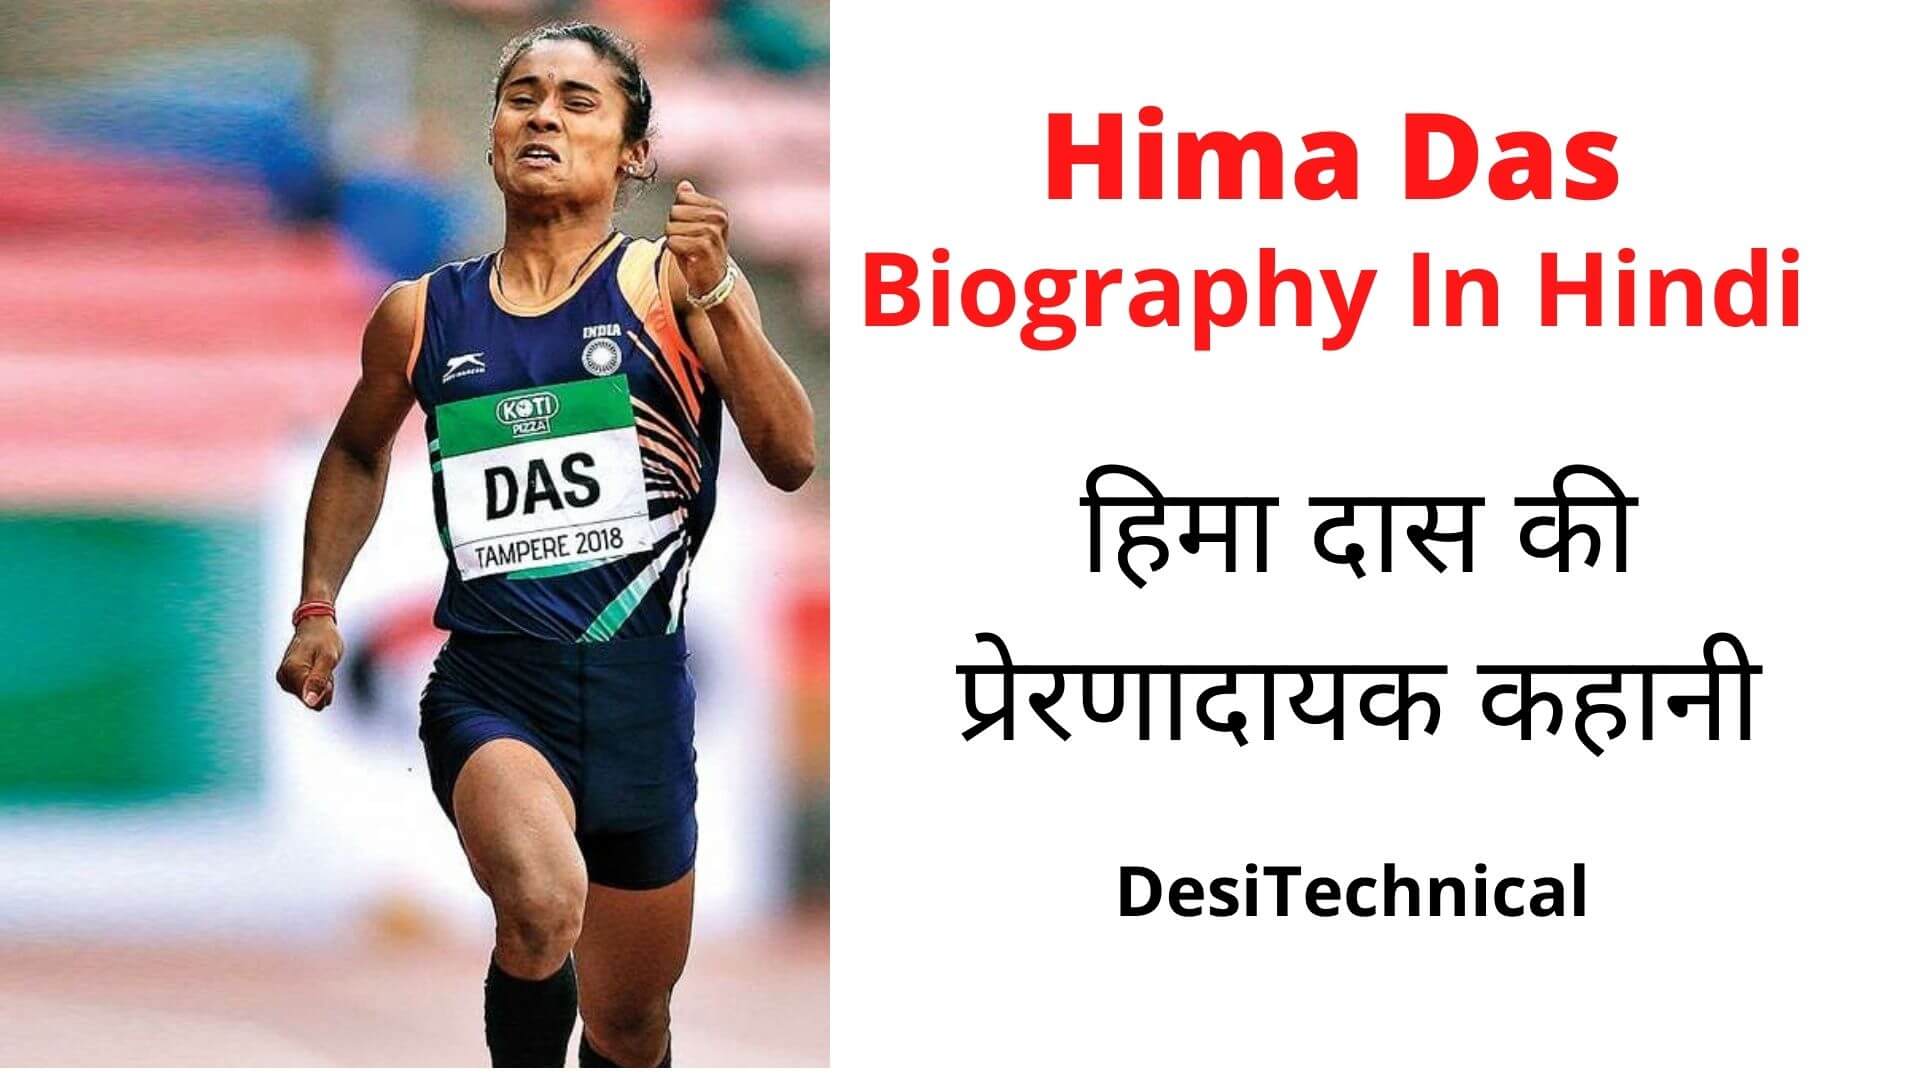 Hima Das Biography In Hindi